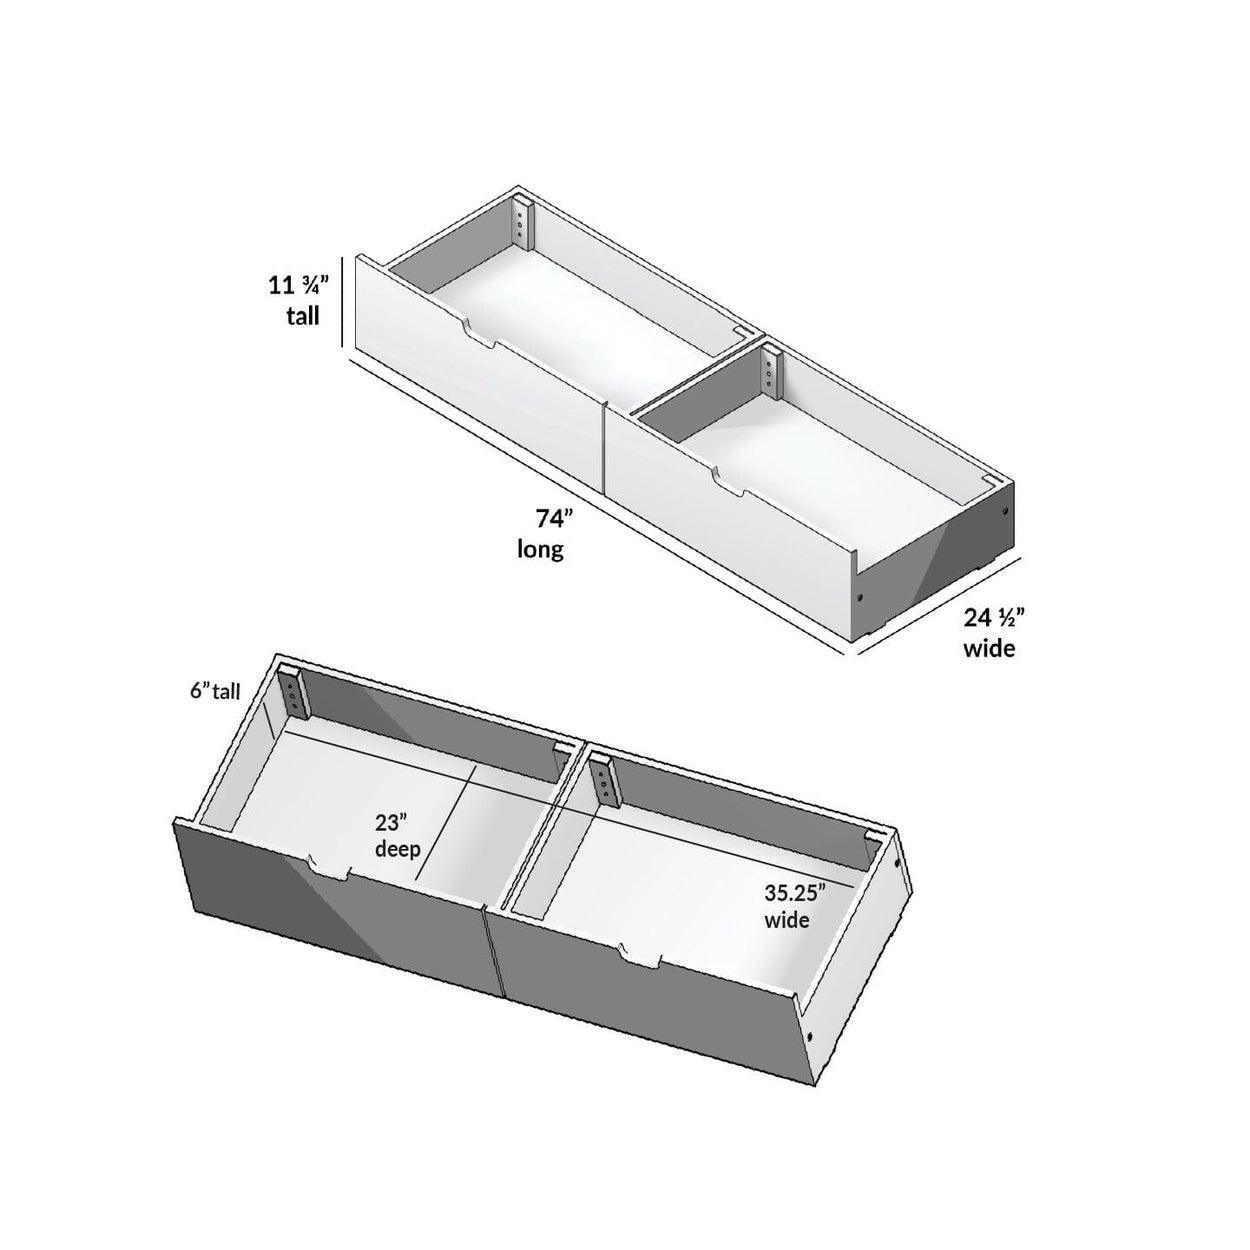 175262-002 : Component 2 Underbed Storage Drawers w/ Rubber Castors, White